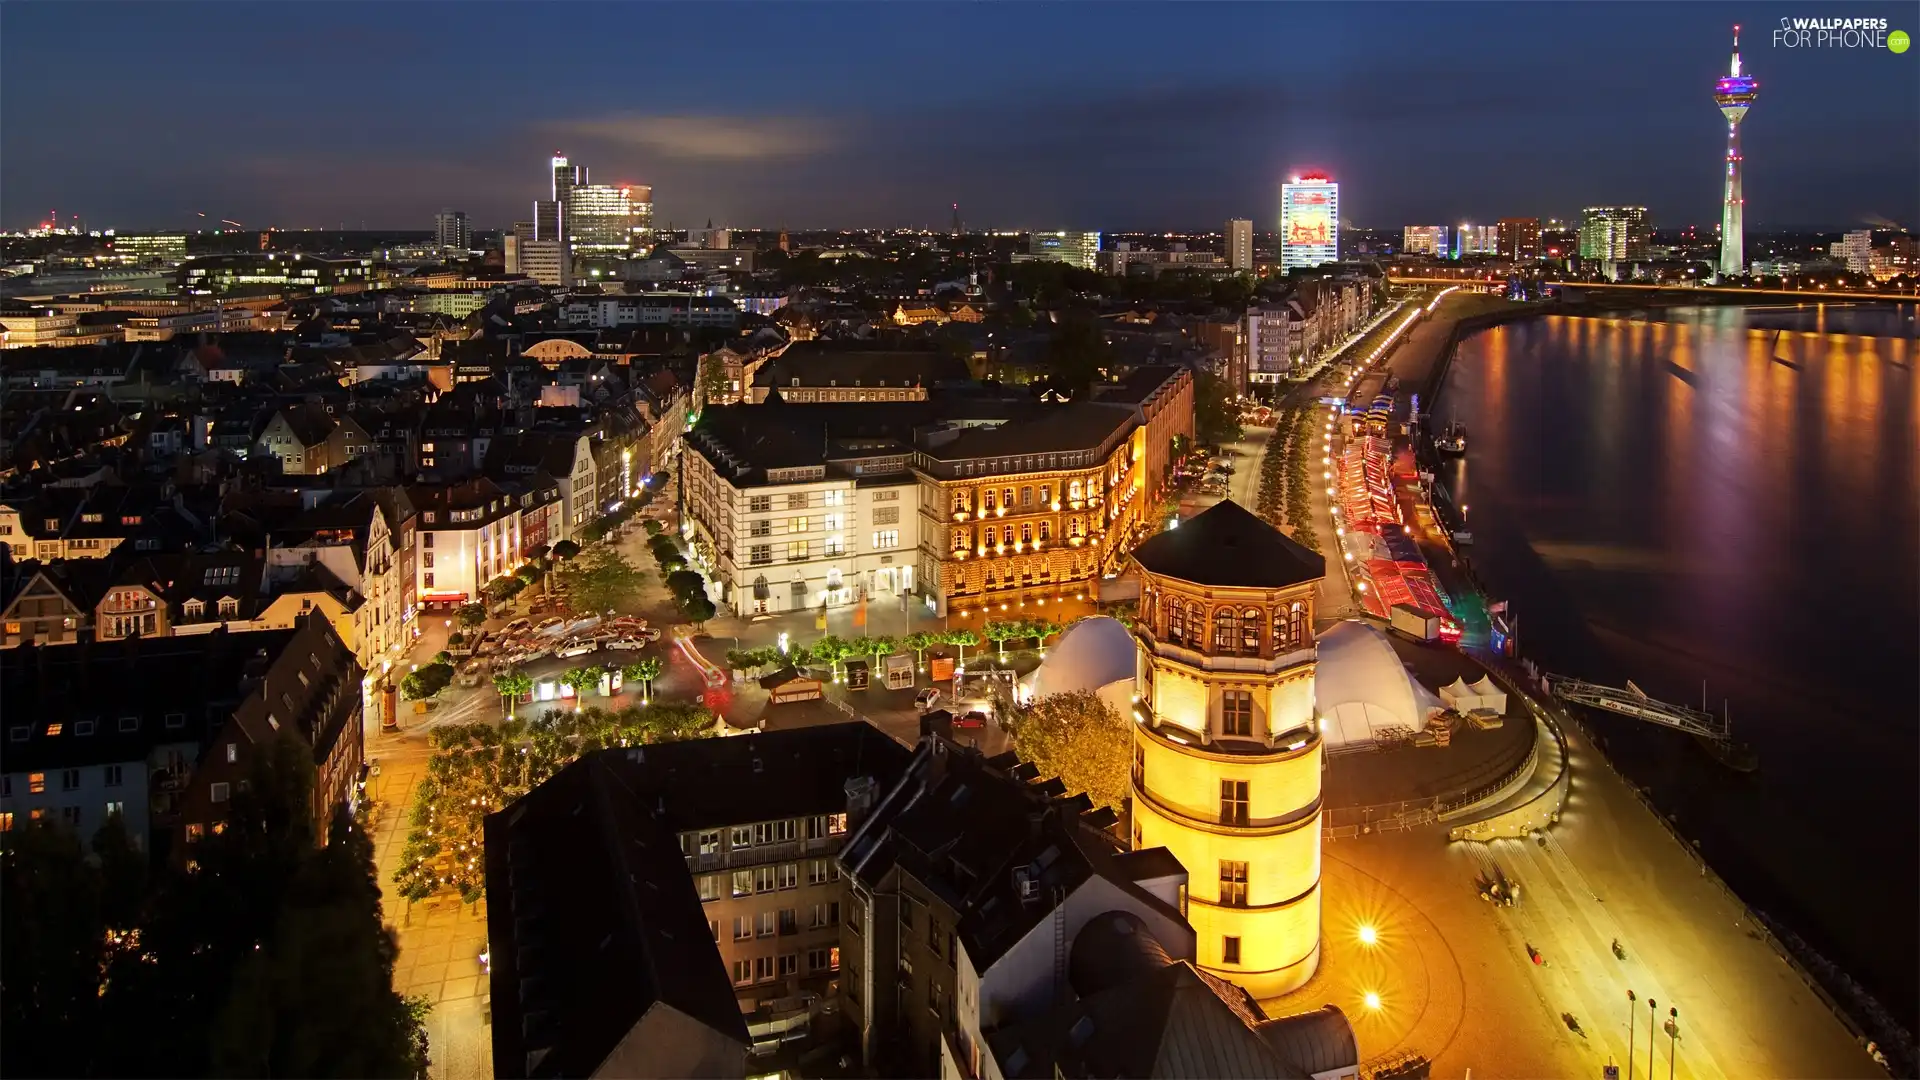 Germany, City at Night, Dusseldorf